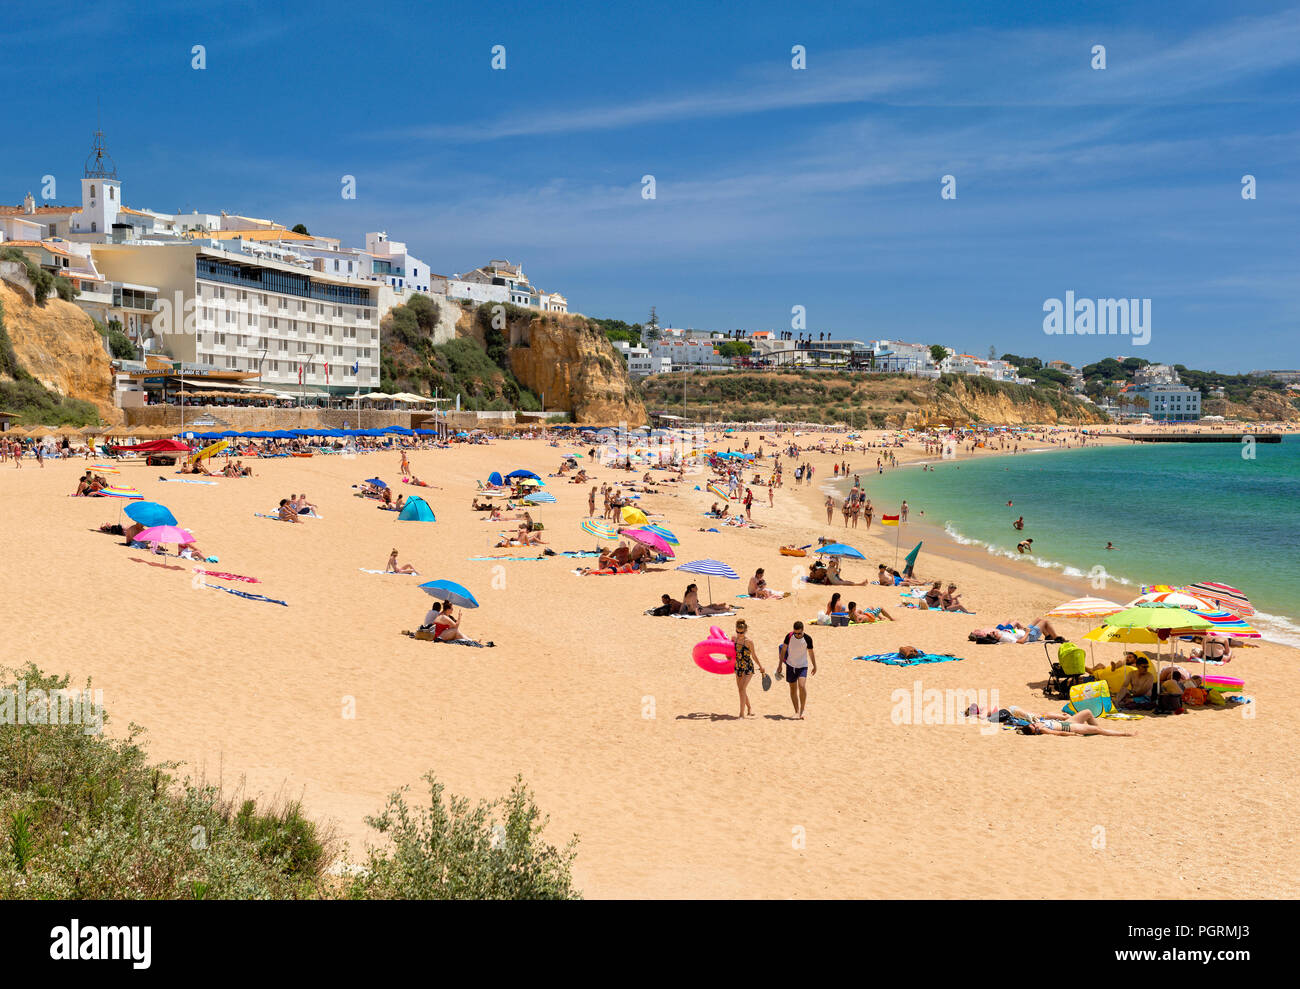 Strand von Albufeira im Sommer mit dem Hotel Sol e Mar. Stockfoto